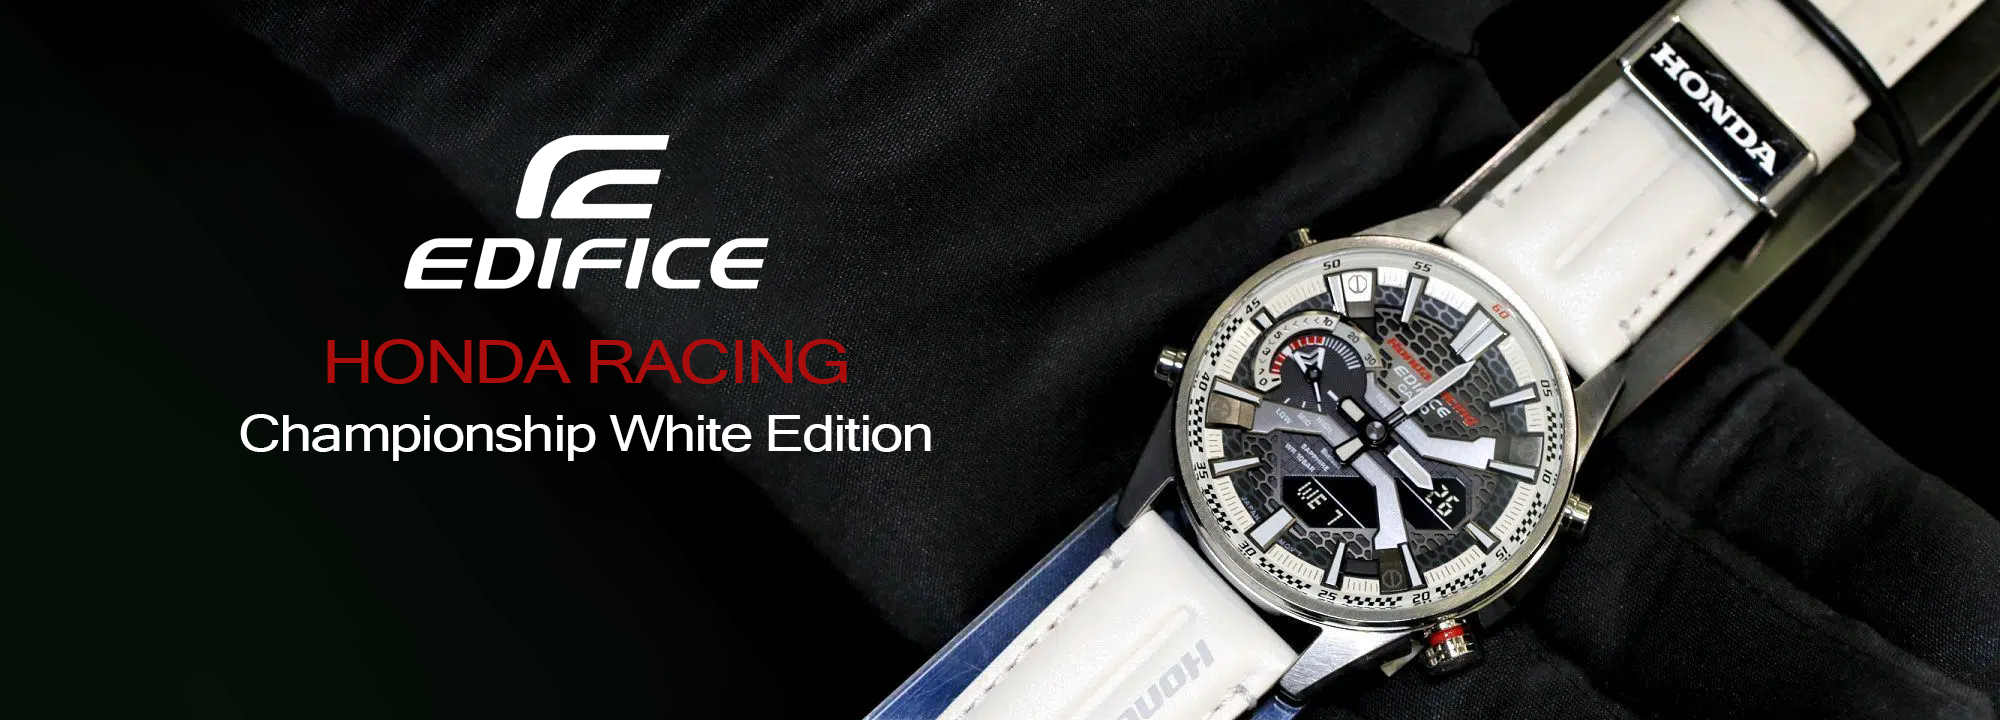 Honda Racing Championship White casio ewatch reloj cuarzo